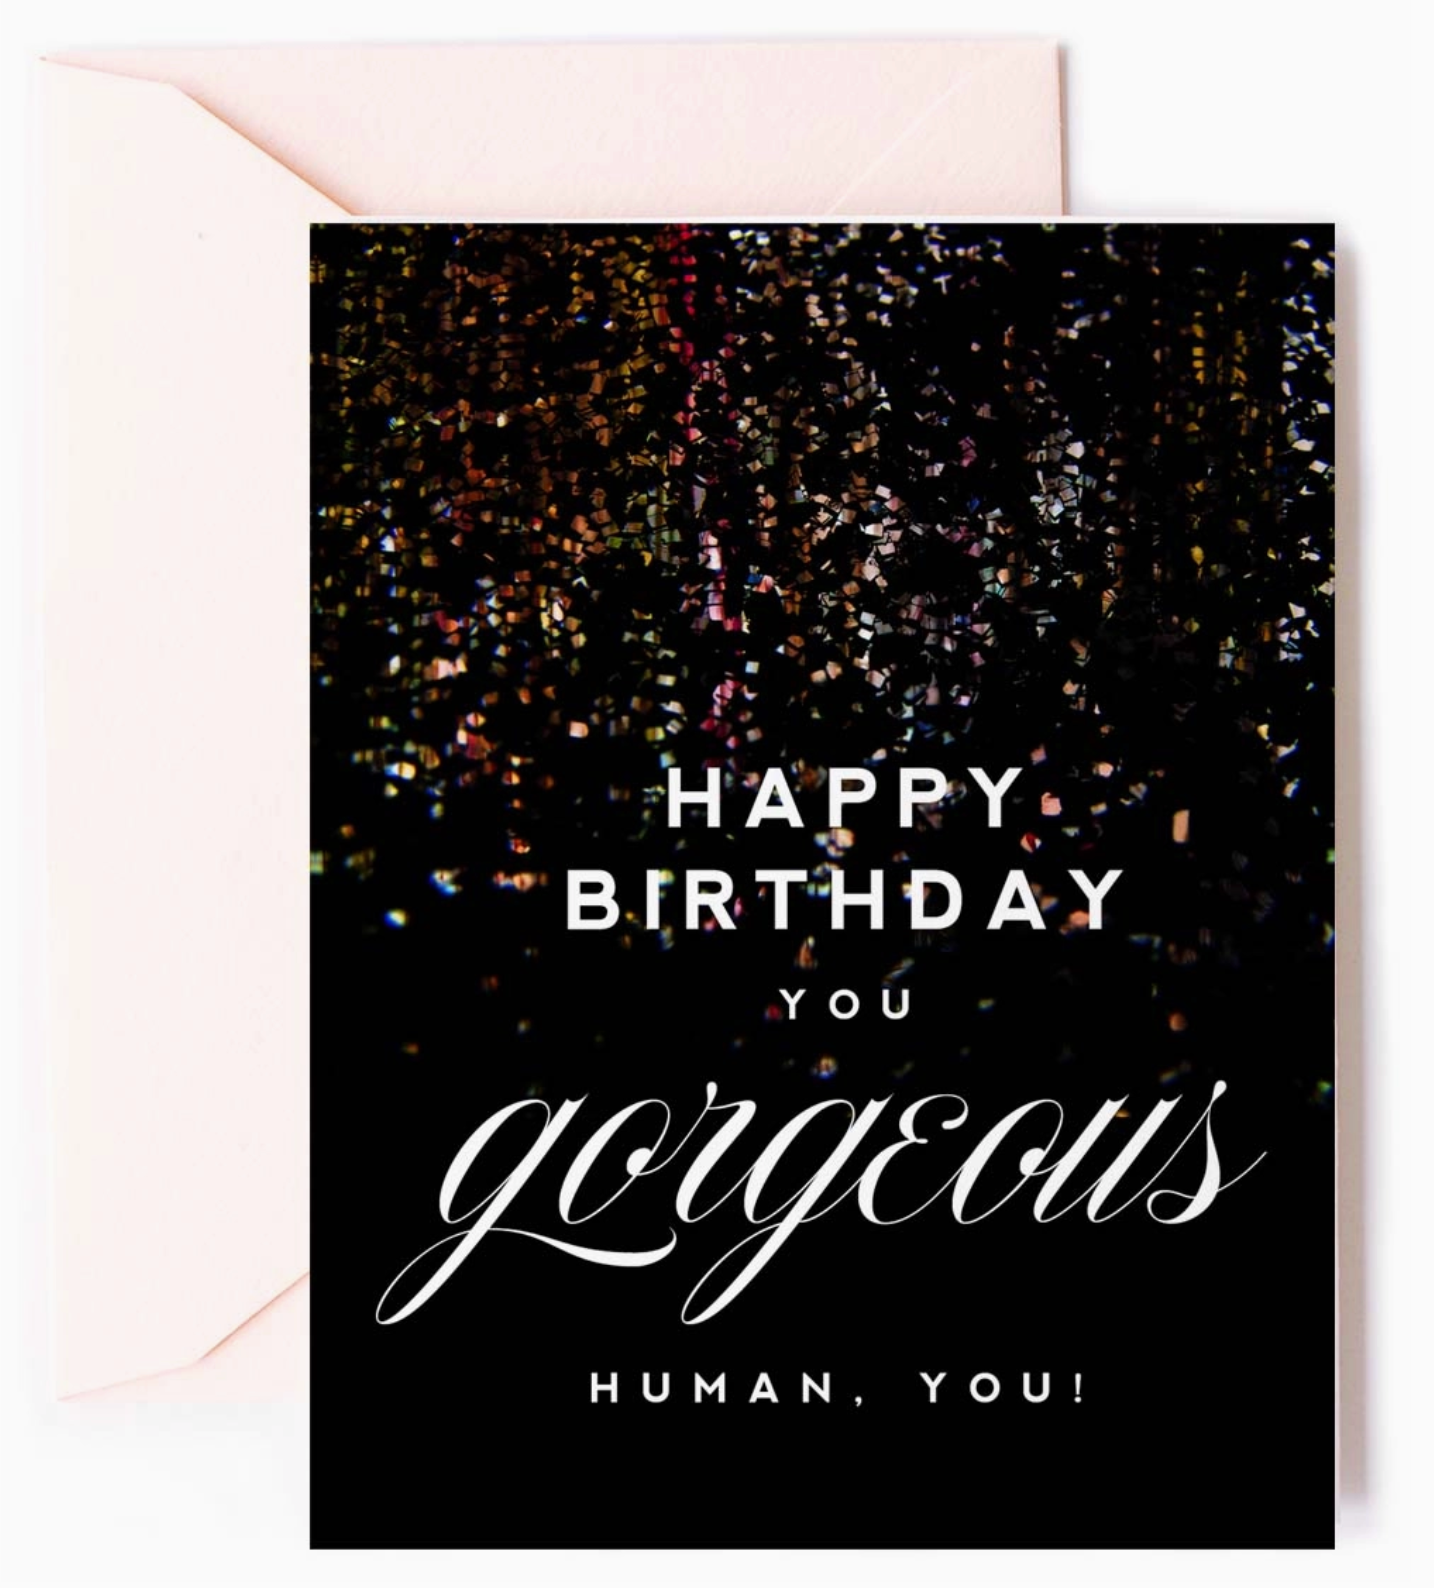 Happy Birthday You Gorgeous Human Card